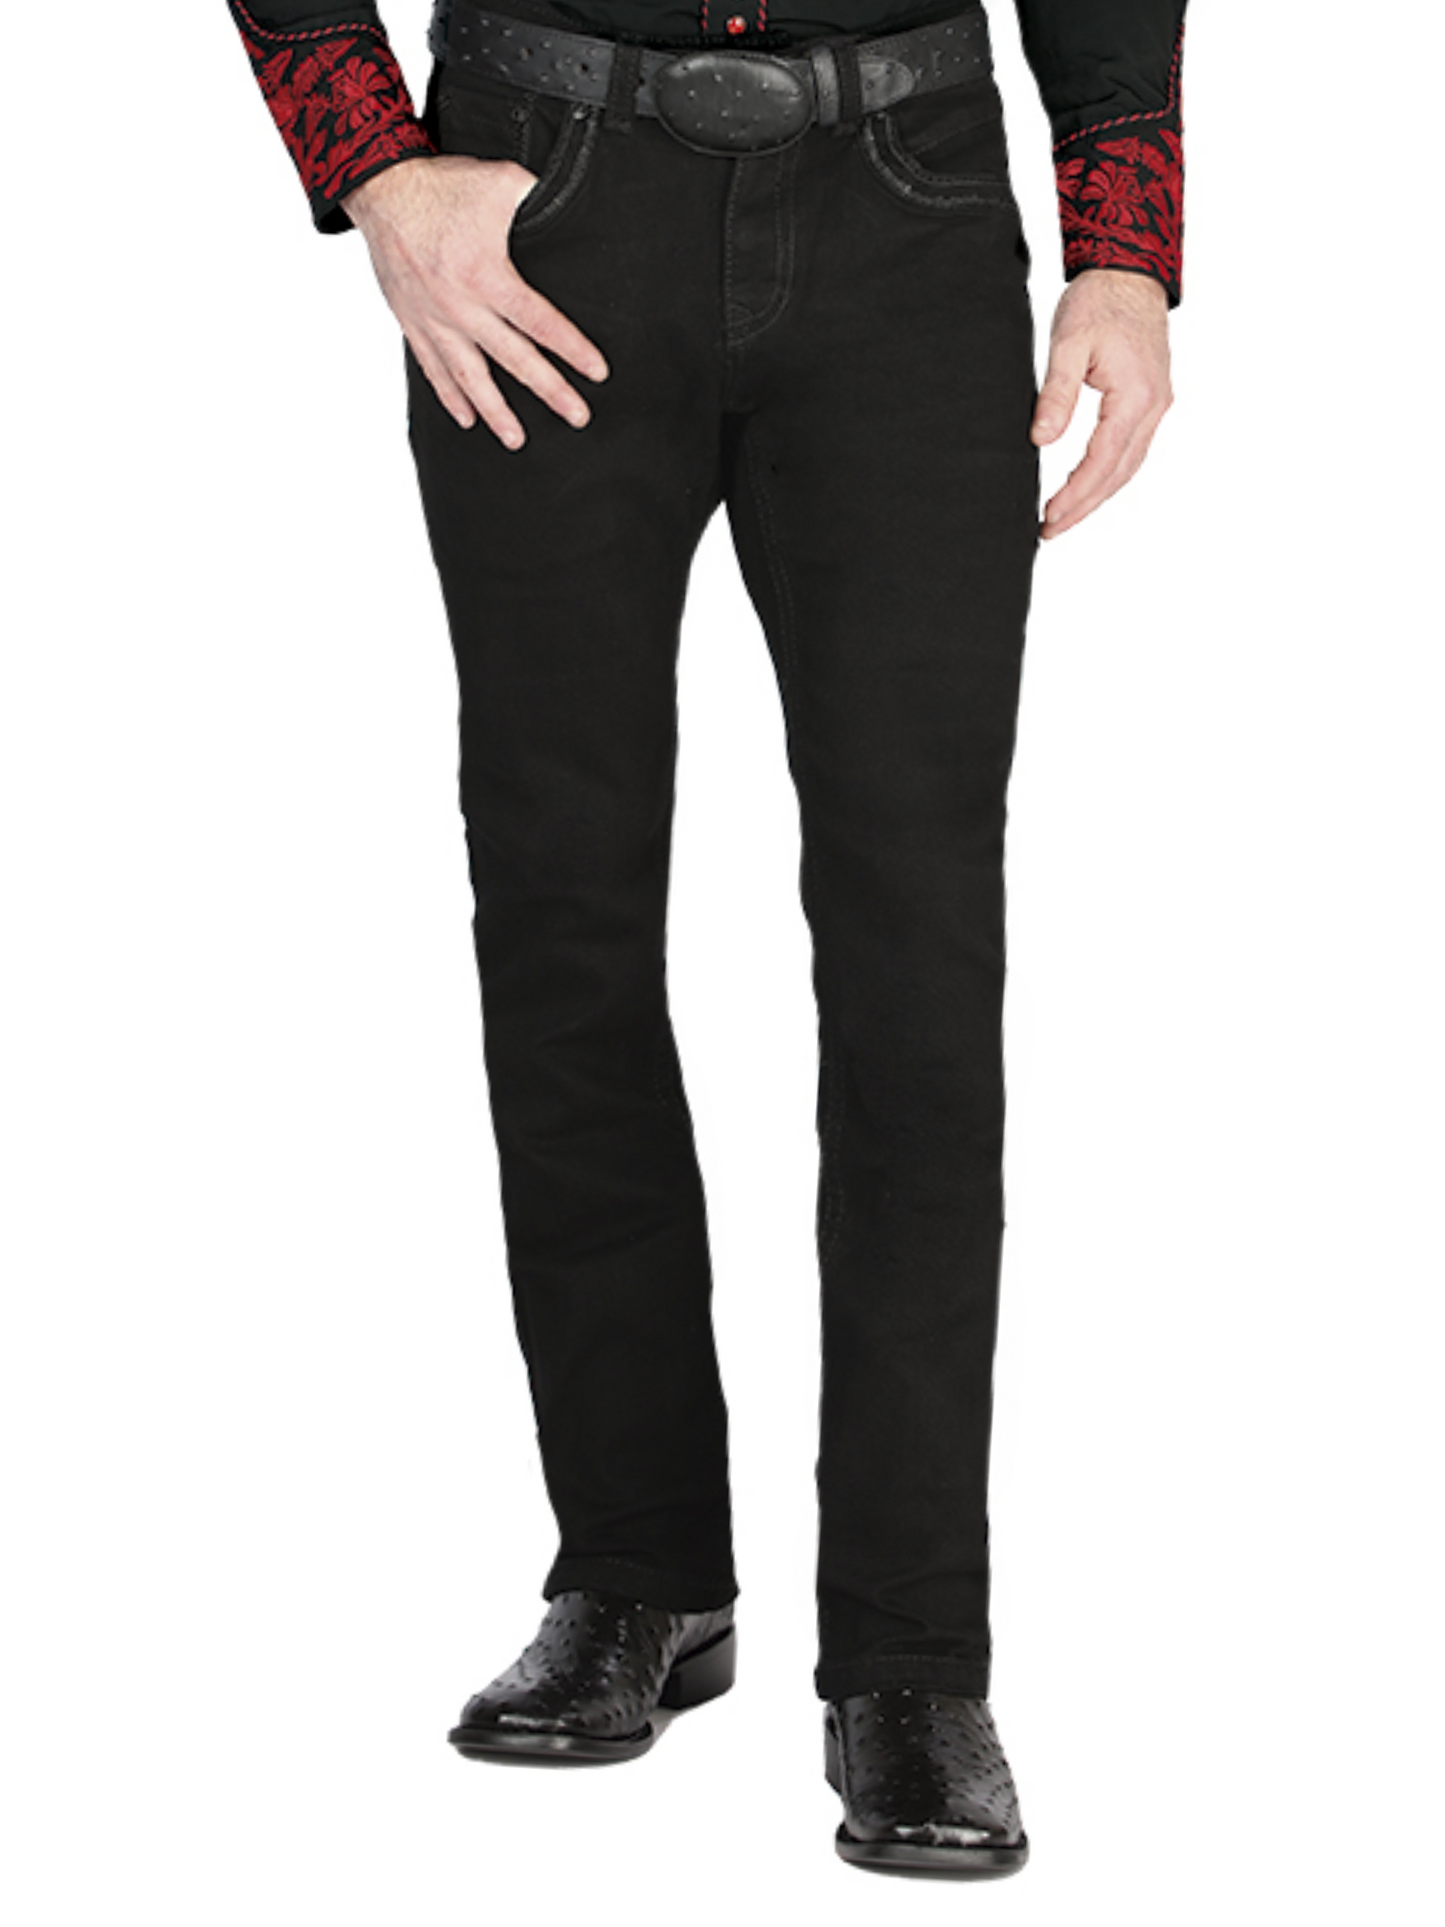 Pantalon Vaquero de Mezclilla Boot Cut Negro para Hombre 'Centenario' - ID: 44831 Denim Jeans Centenario 